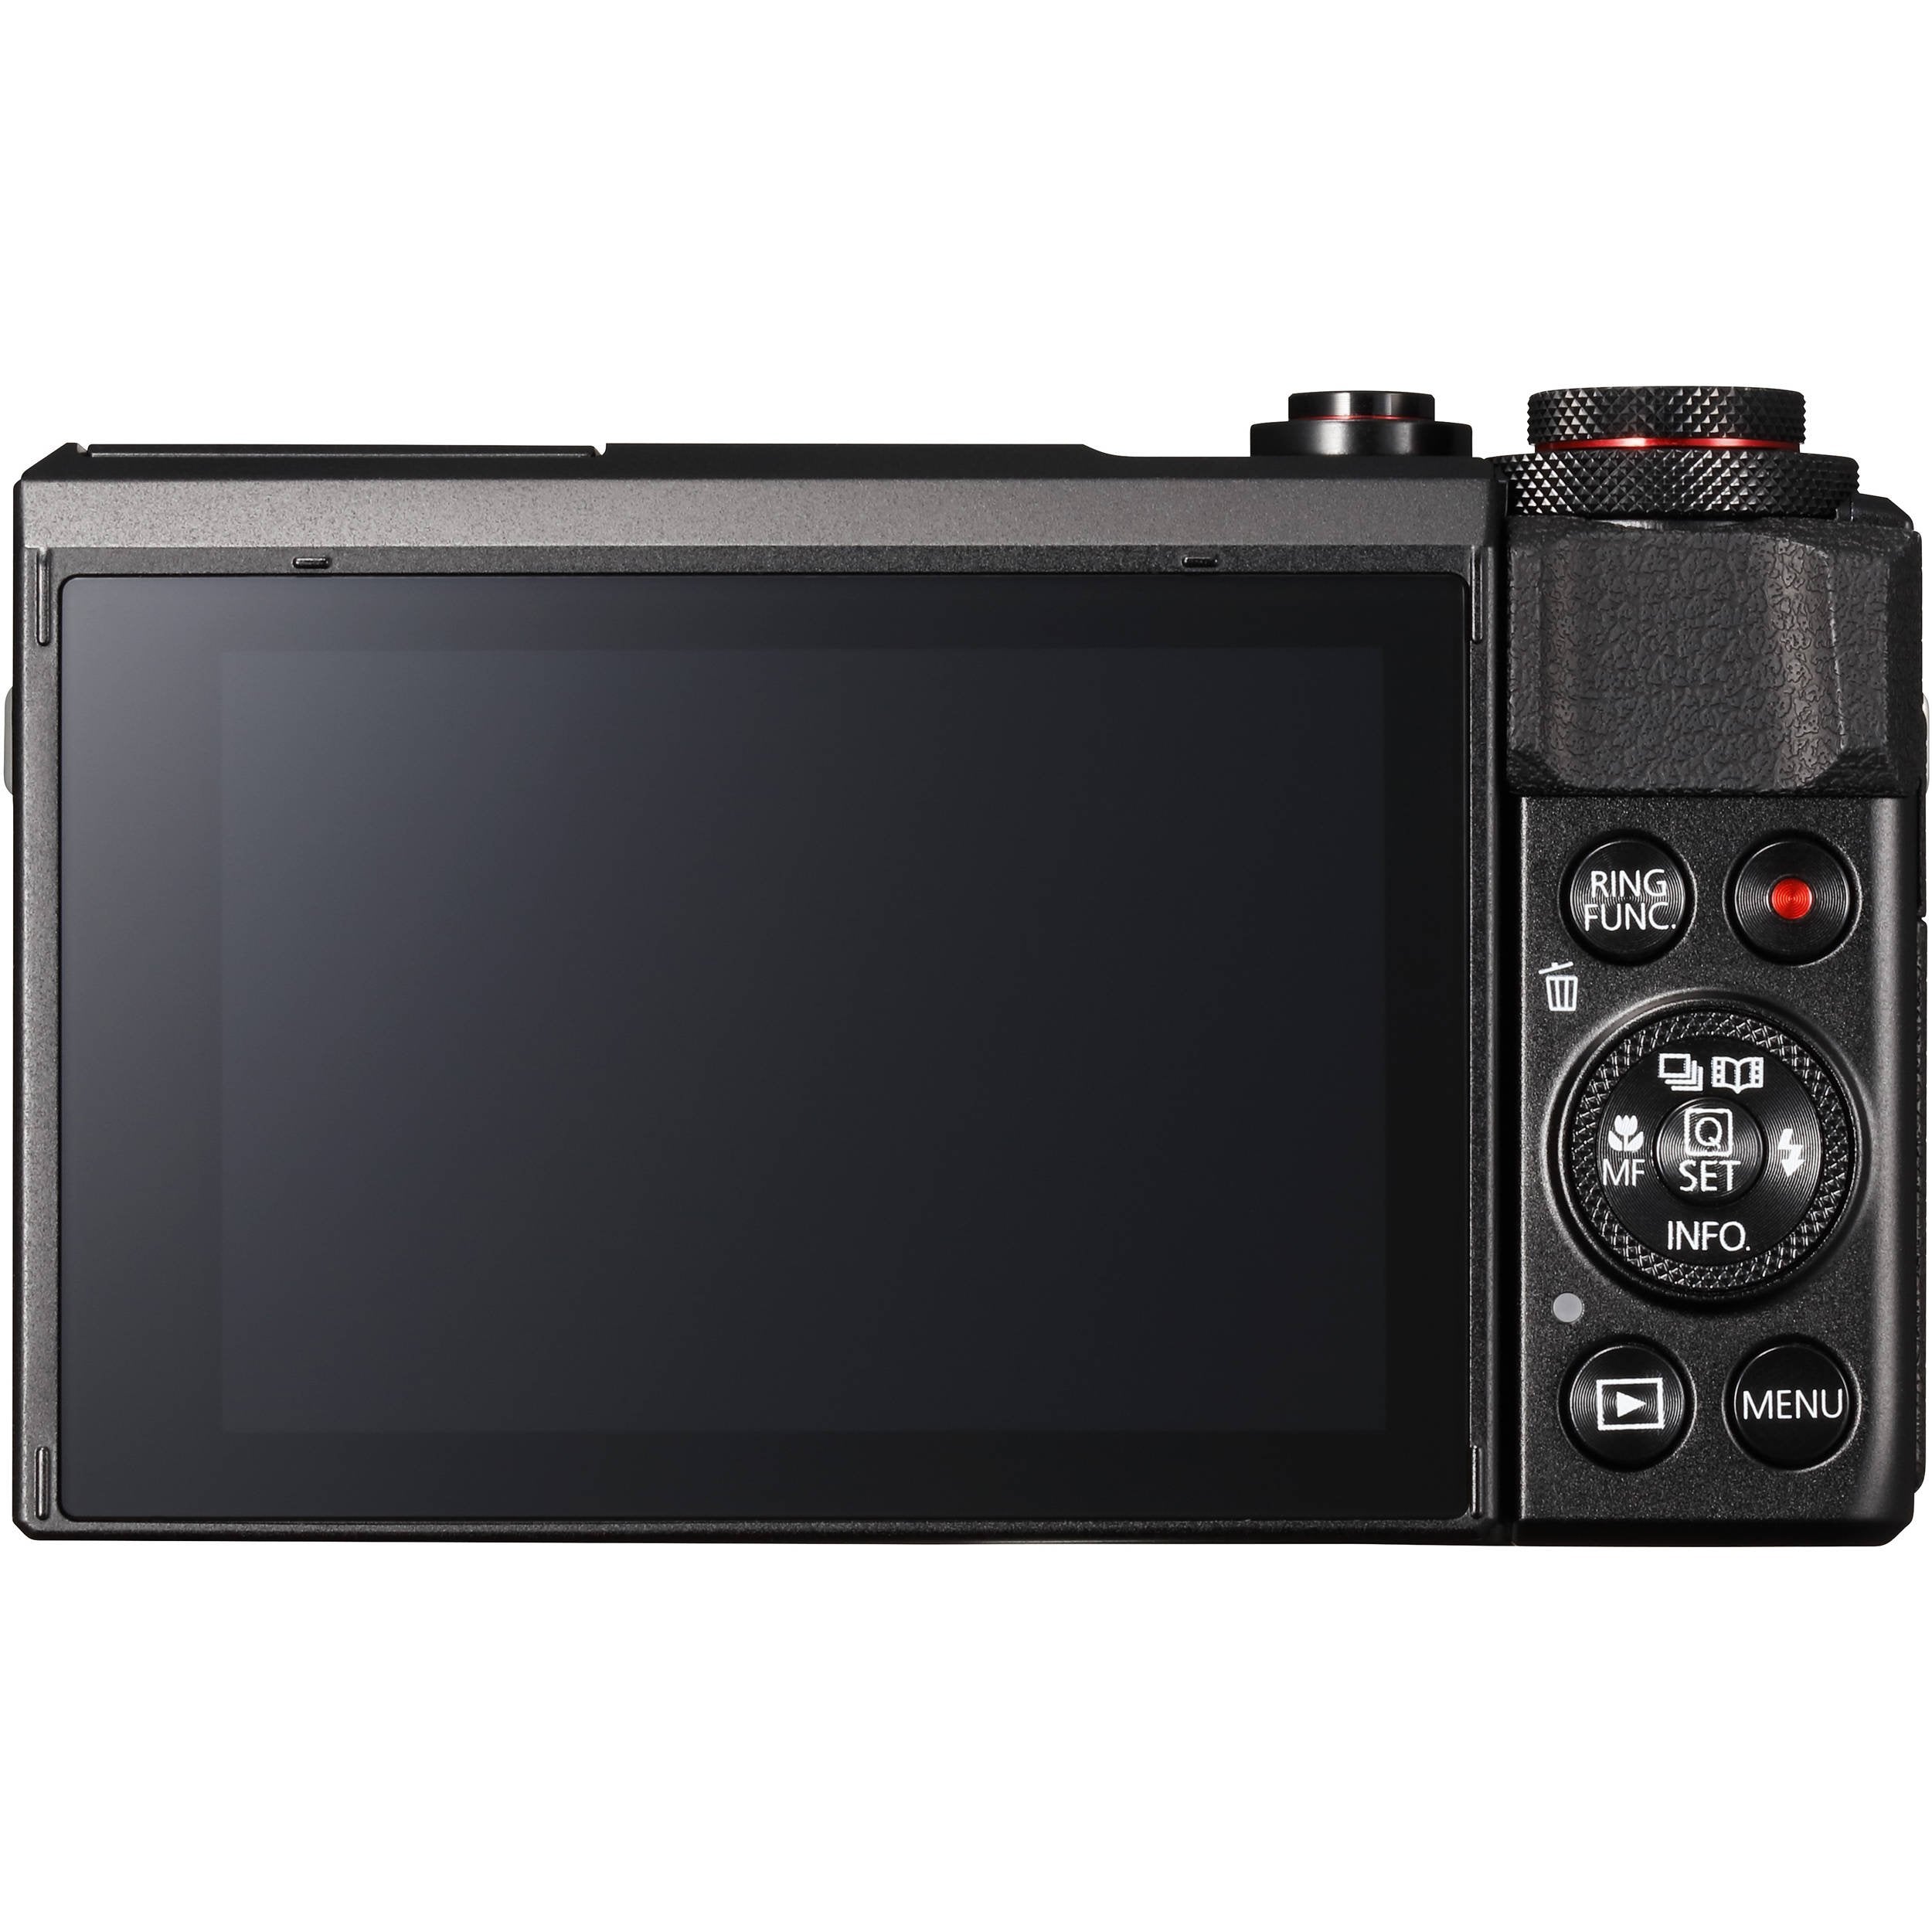 Canon PowerShot G7 X Mark II Digital Camera (Intl Model) + 32gb Memory SD Card Bundle + Camera Case + Cleaning Kit